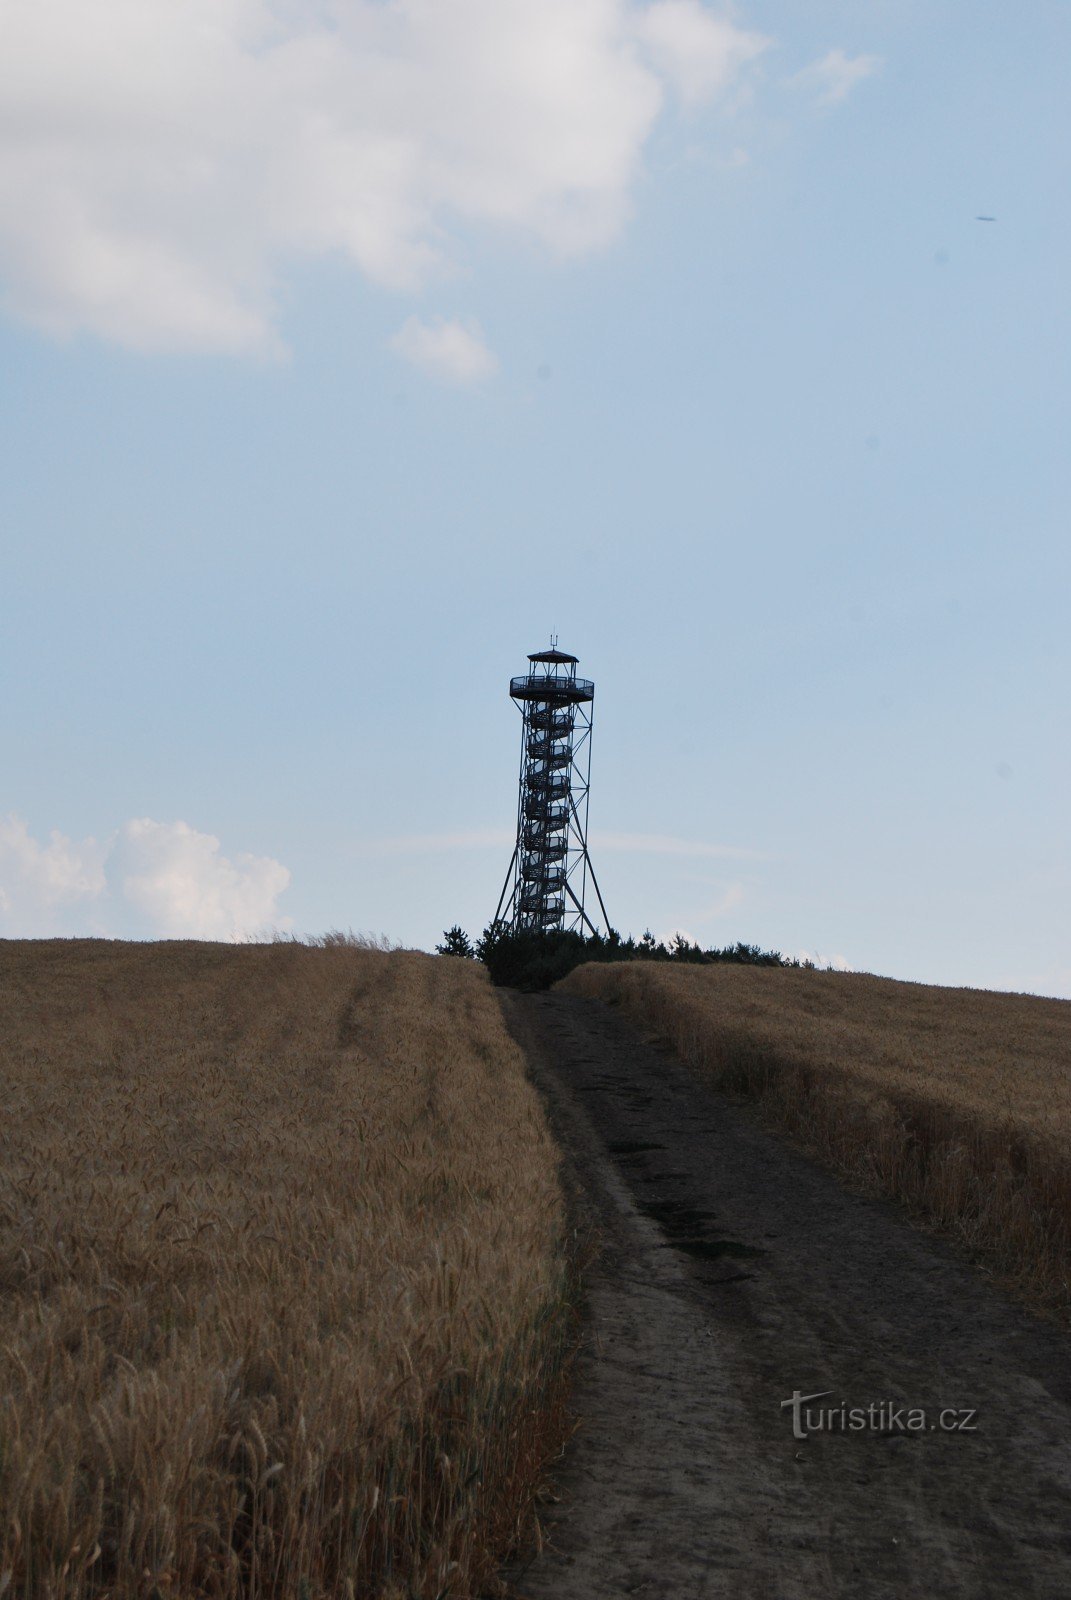 Chocholik lookout tower